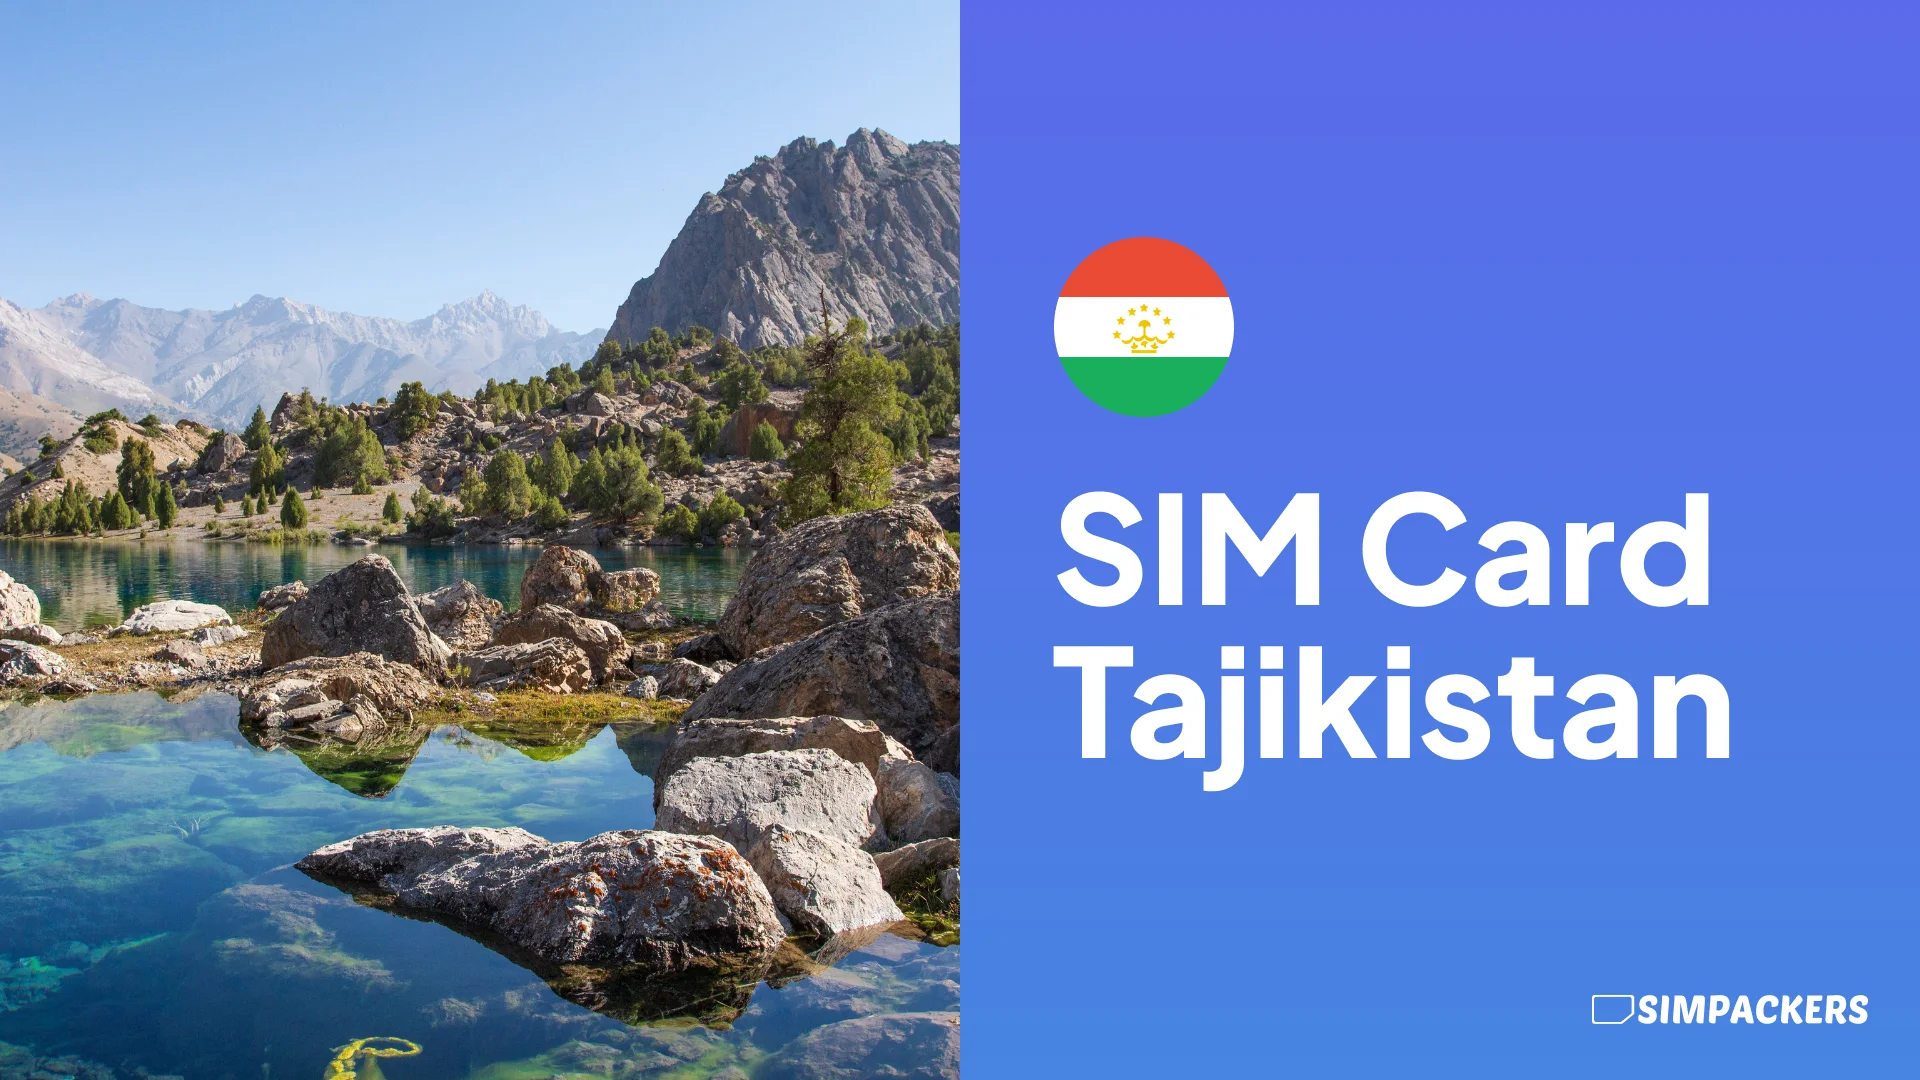 EN/FEATURED_IMAGES/sim-card-tajikistan.webp